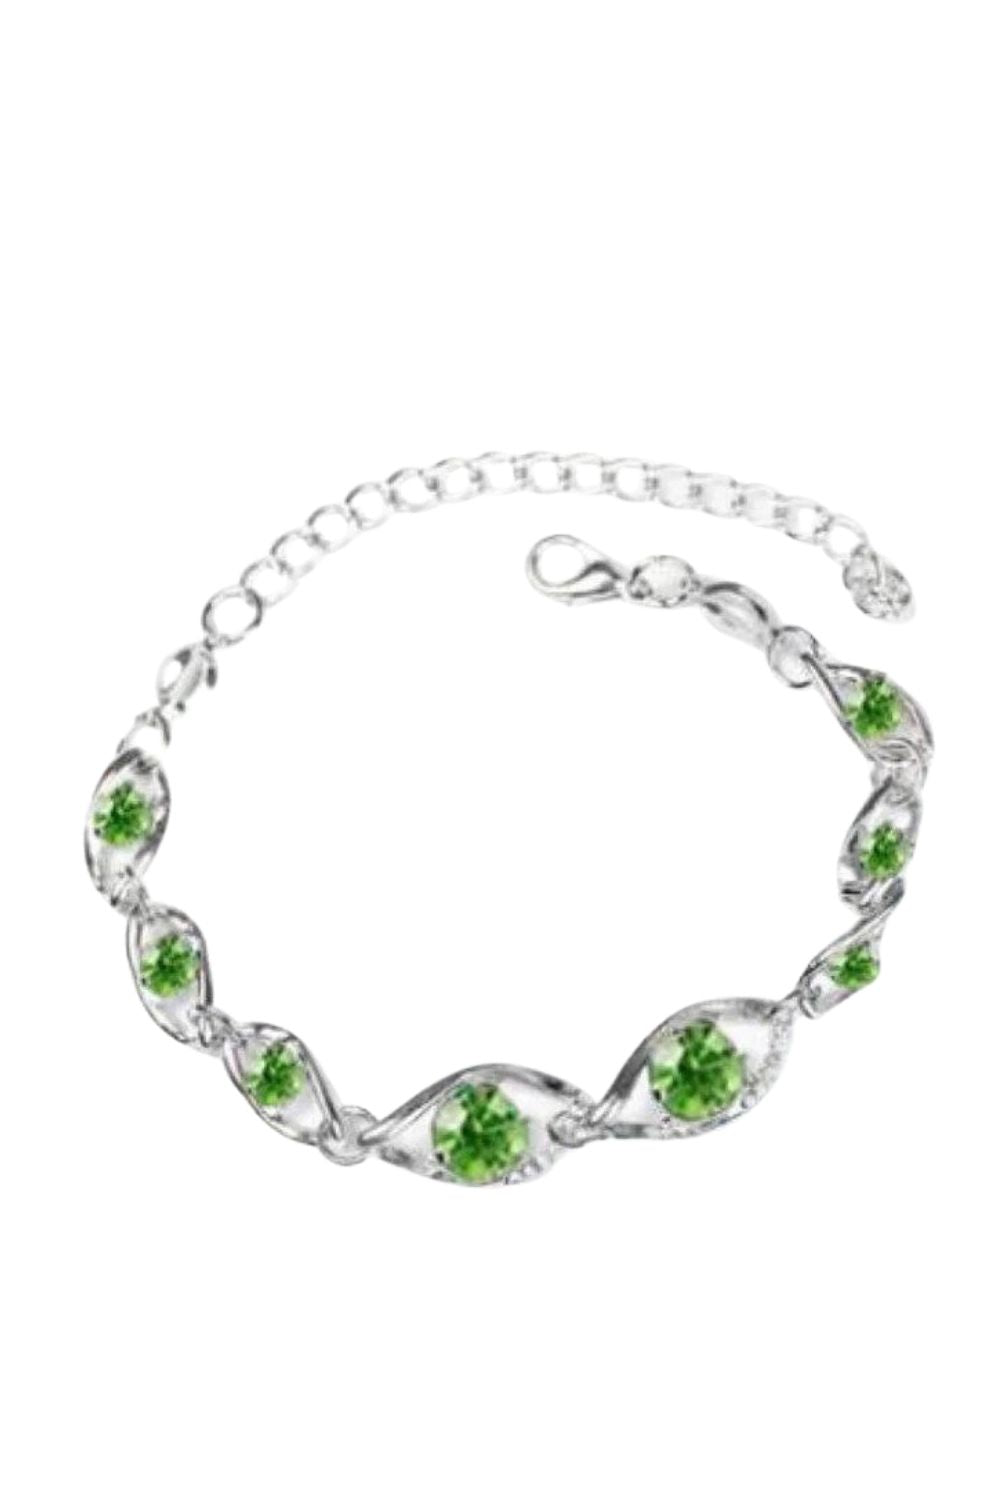 Rich is Rich Green Rhinestone Bracelet - Paparazzi Accessories- lightbox - CarasShop.com - $5 Jewelry by Cara Jewels